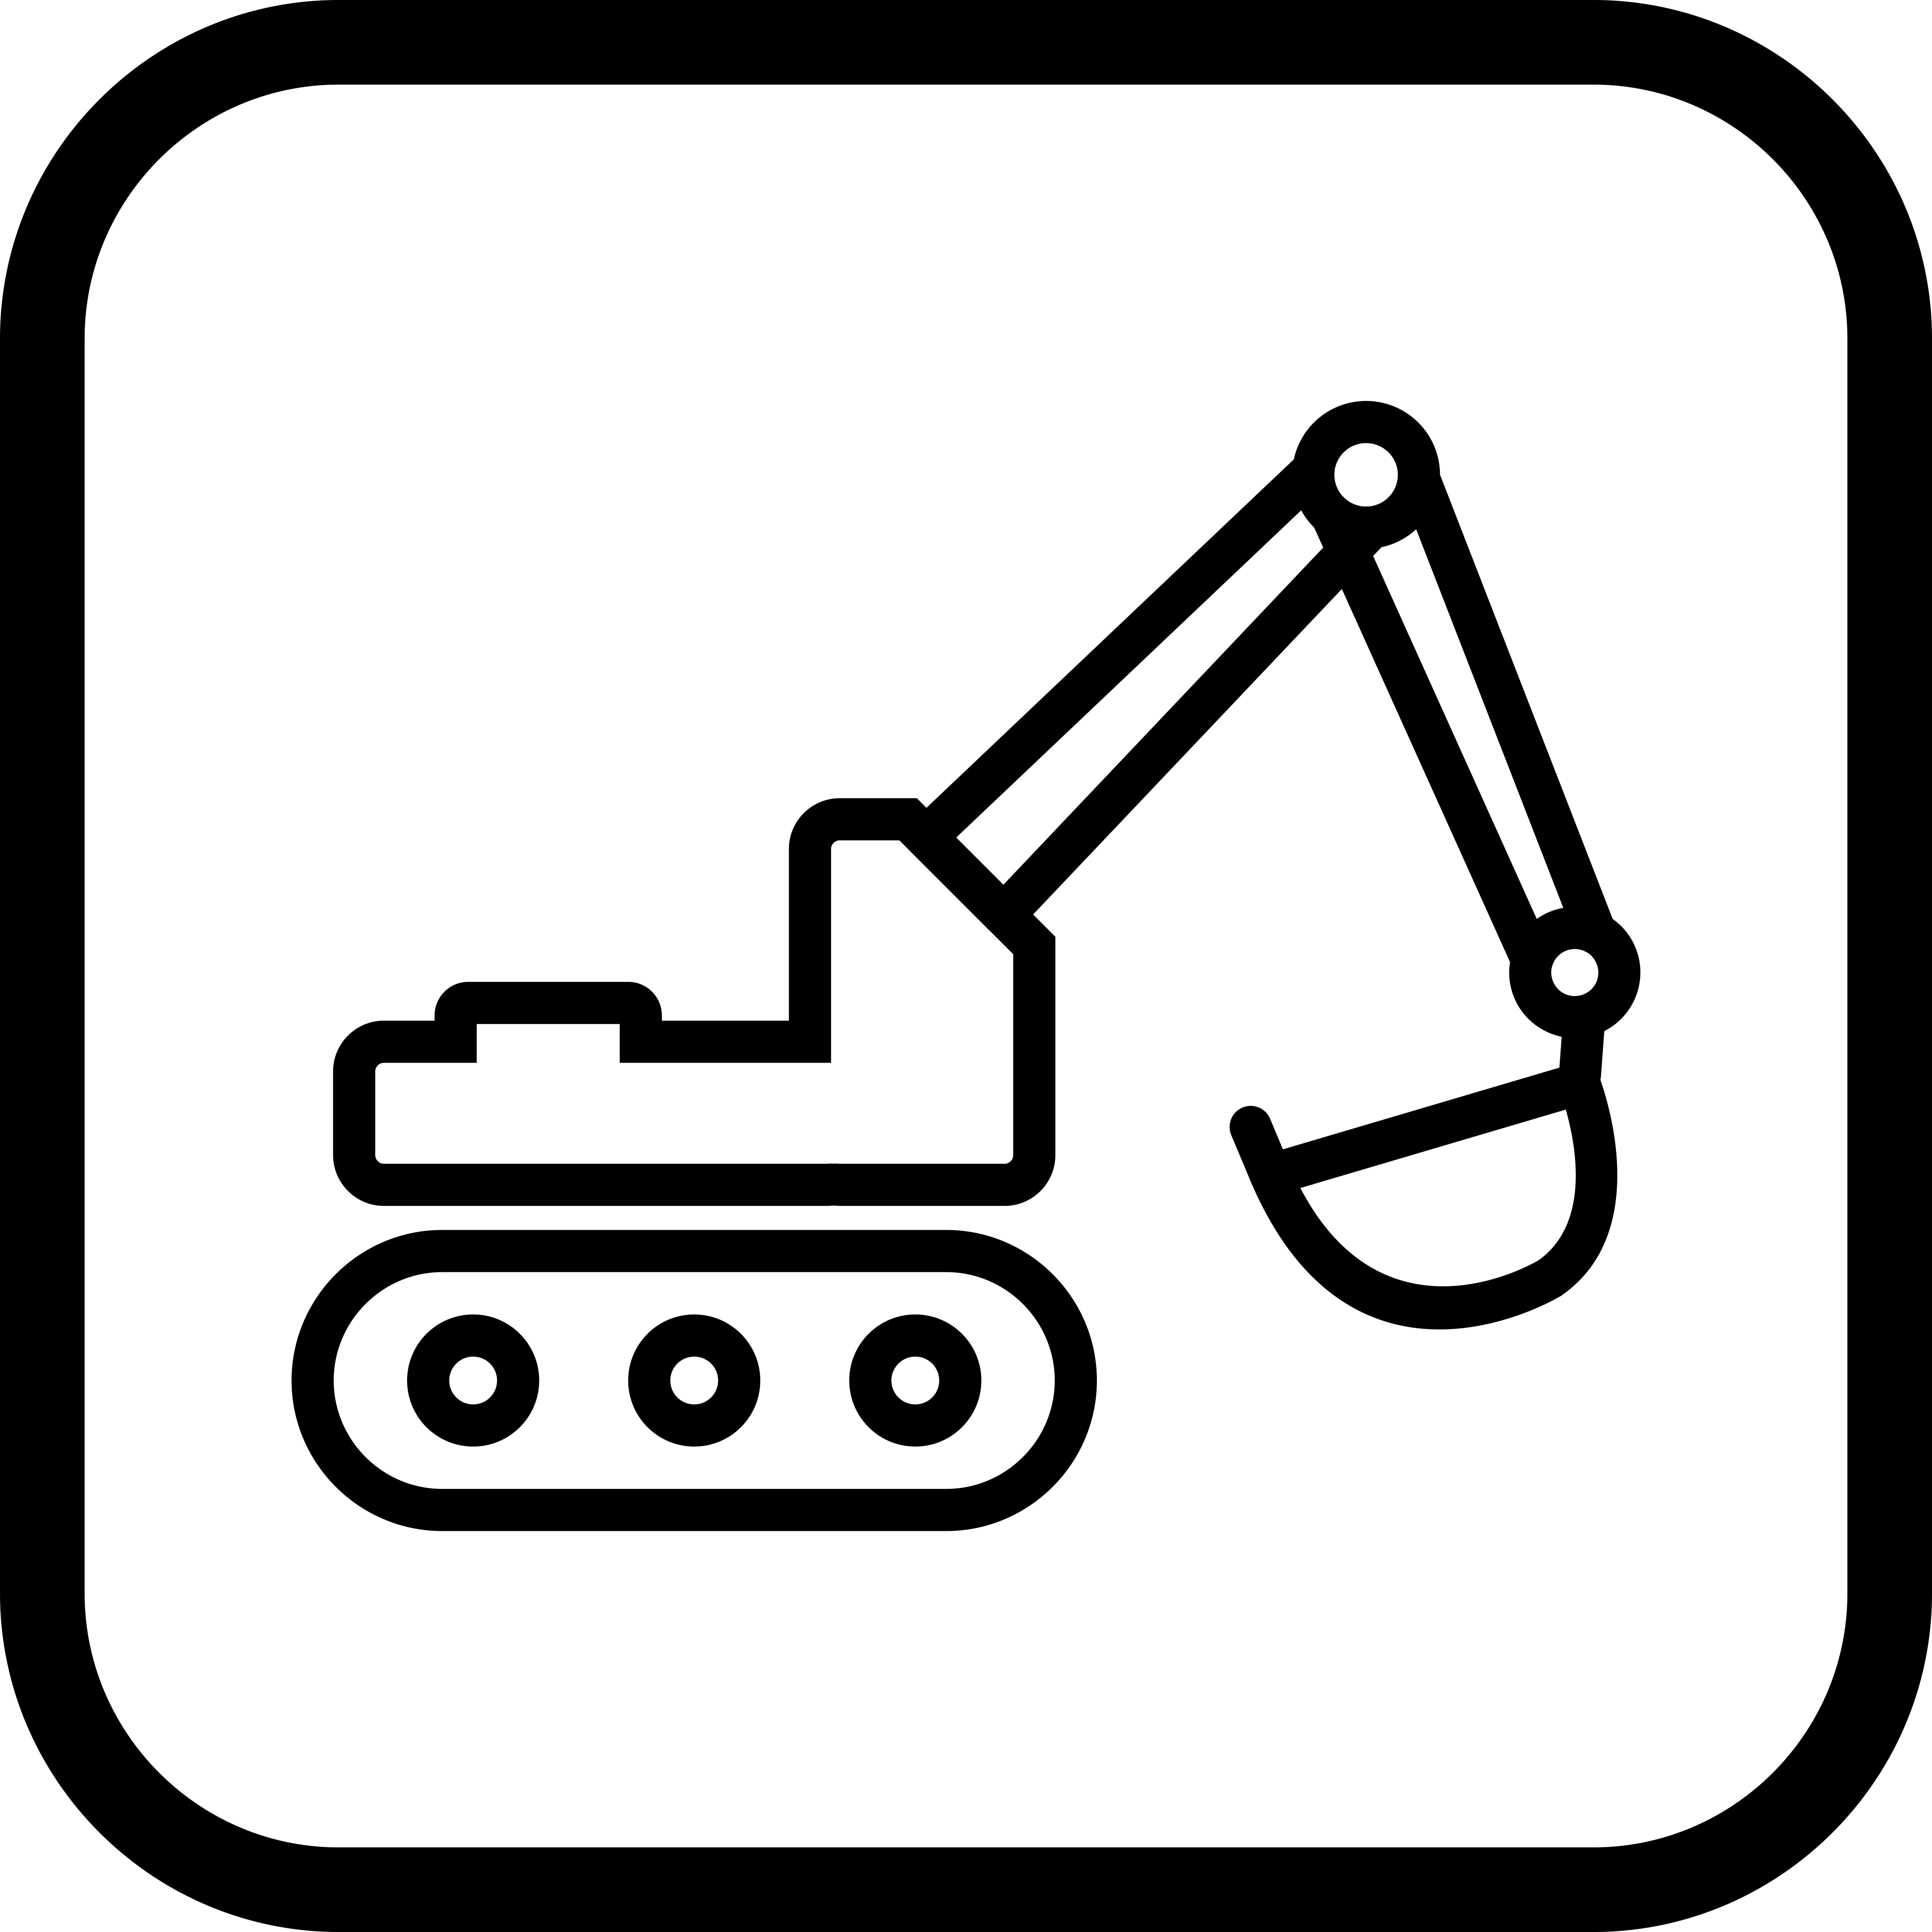 Download Excavator Icon Design 505098 - Download Free Vectors ...